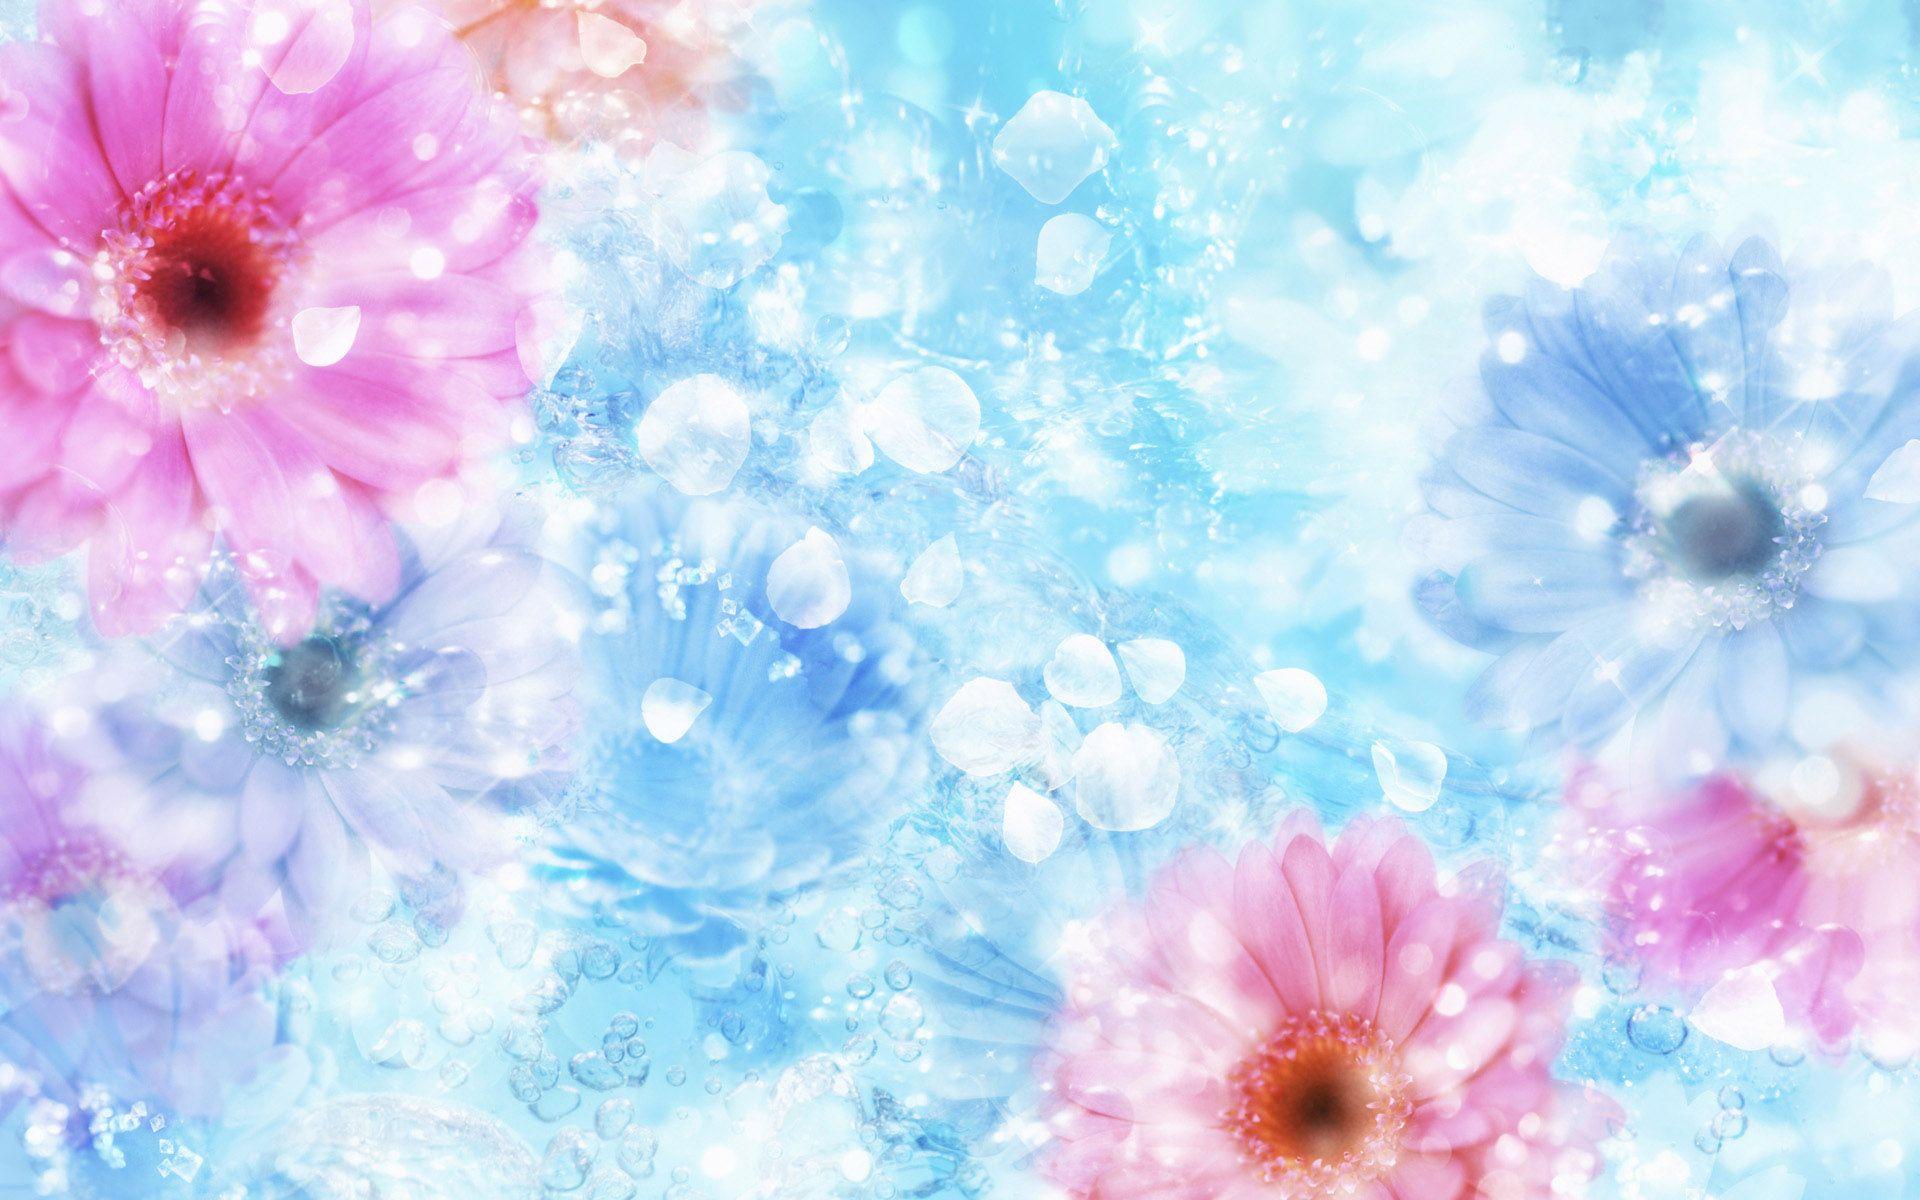 Flower Background Wallpaper